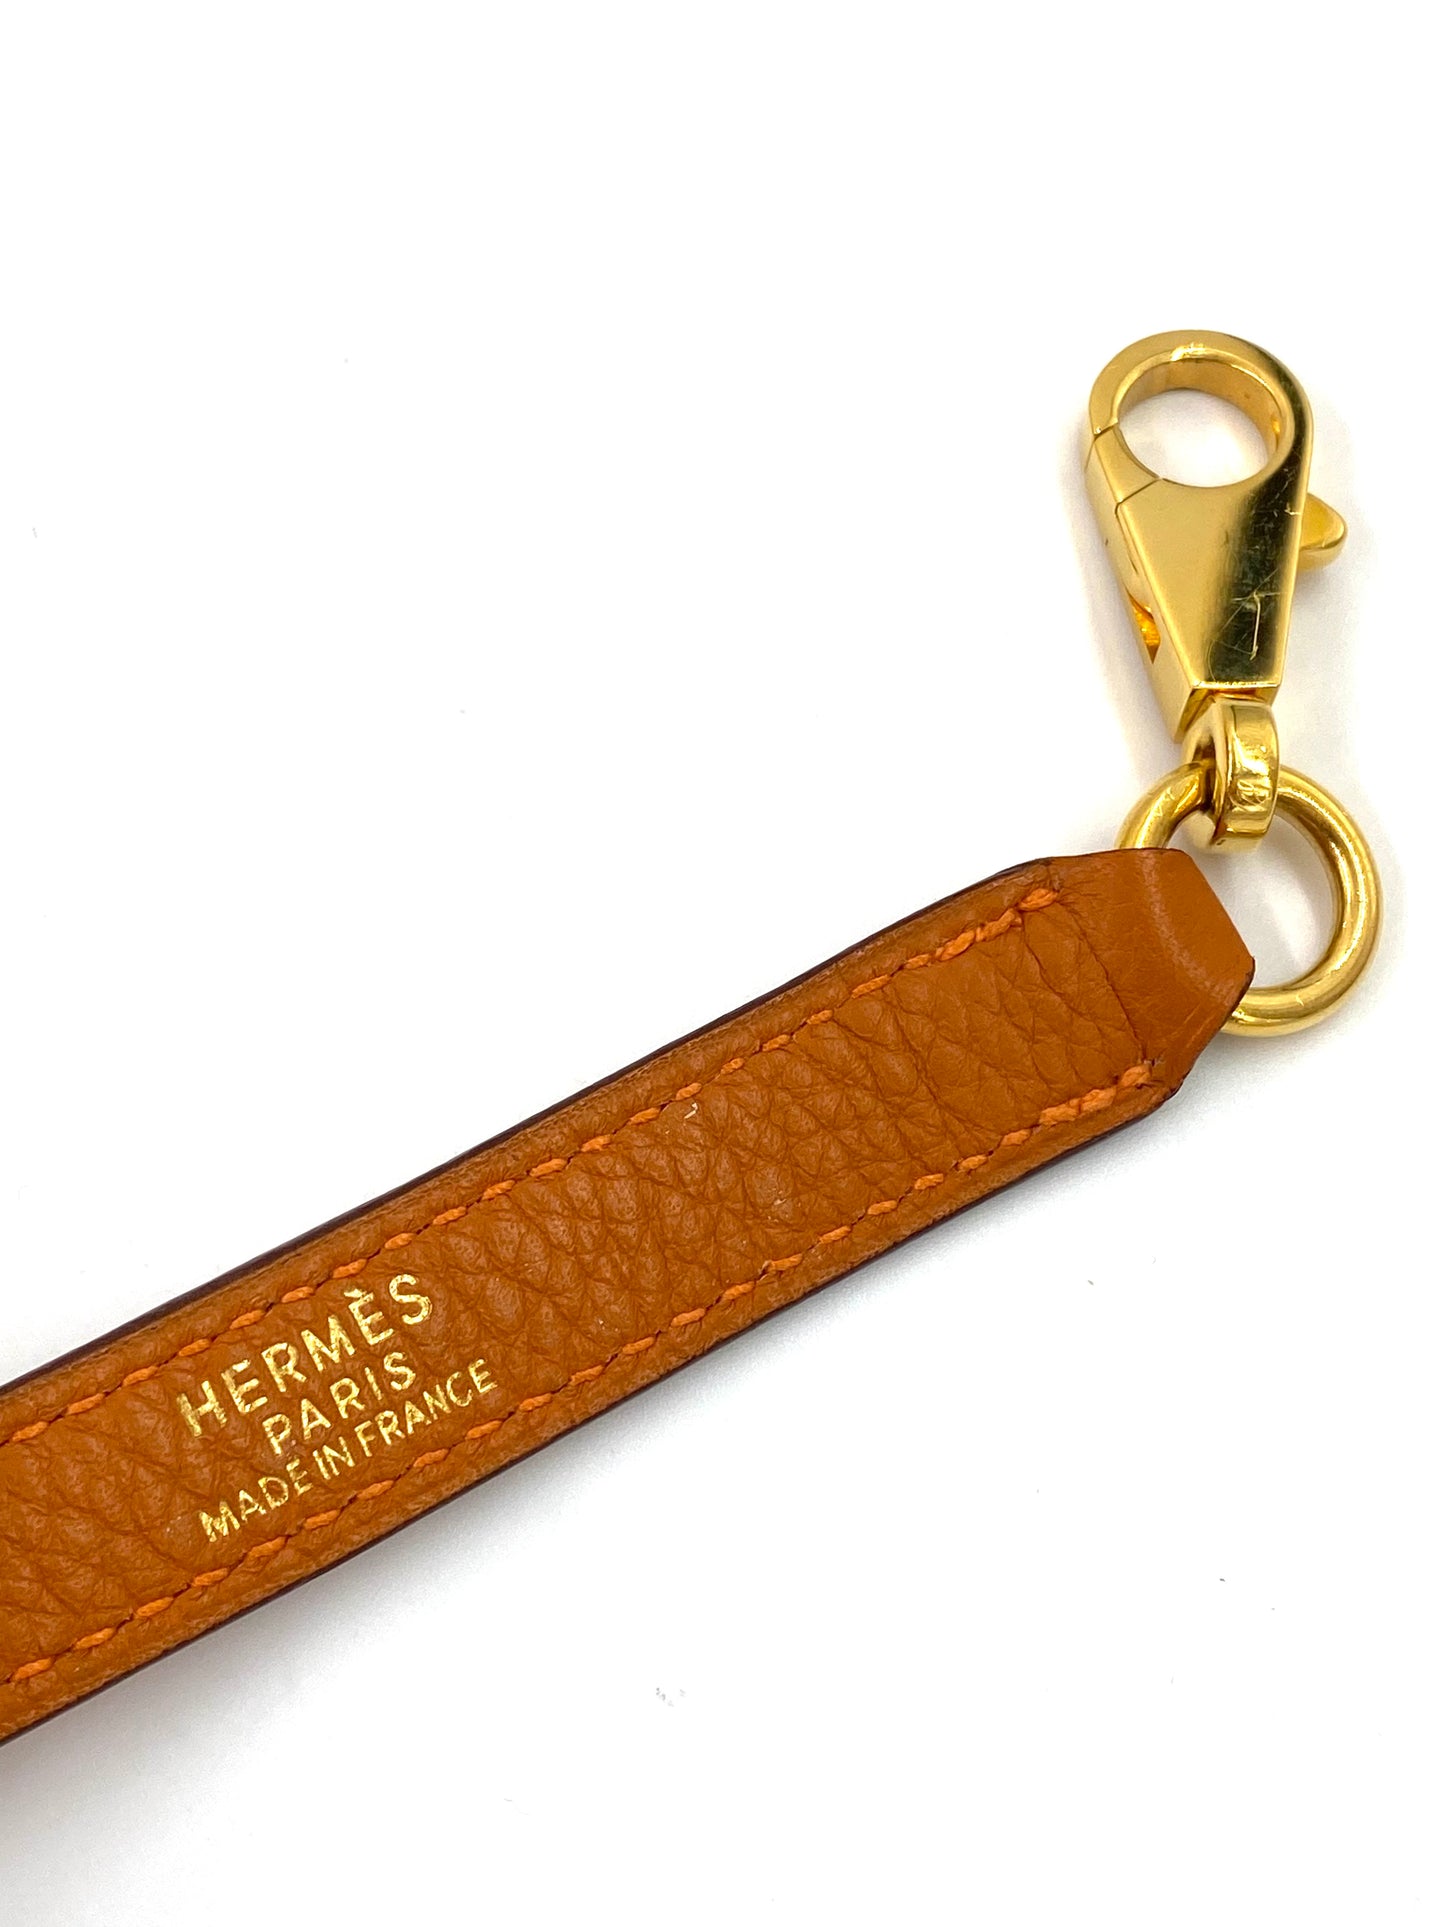 HERMÈS Kelly 32 Retourne orange Togo Leather mit Gold Hardware